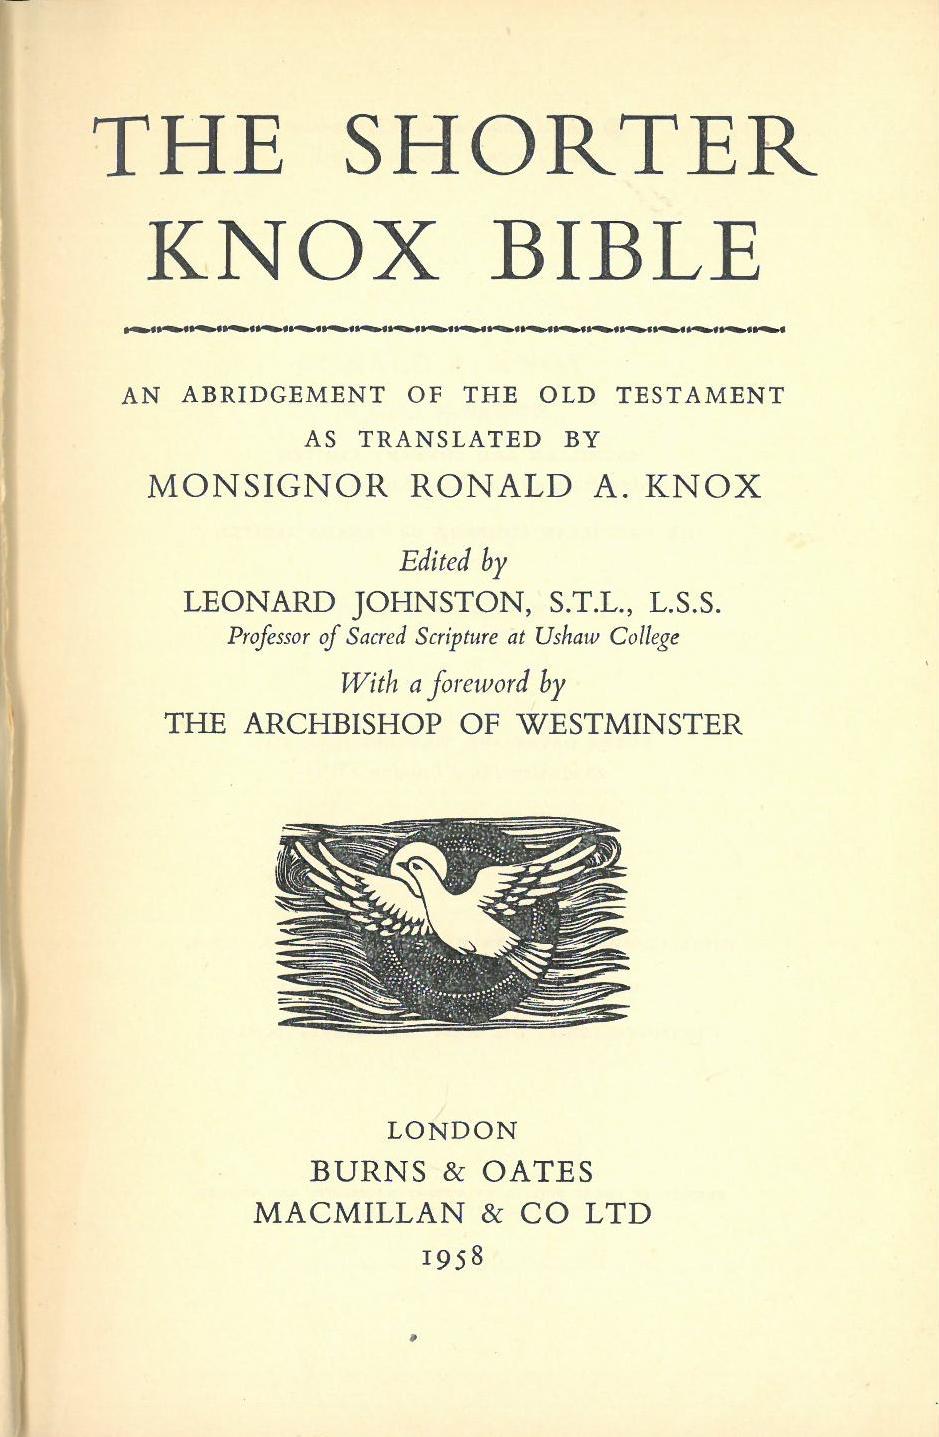 Monsignor Ronald Knox